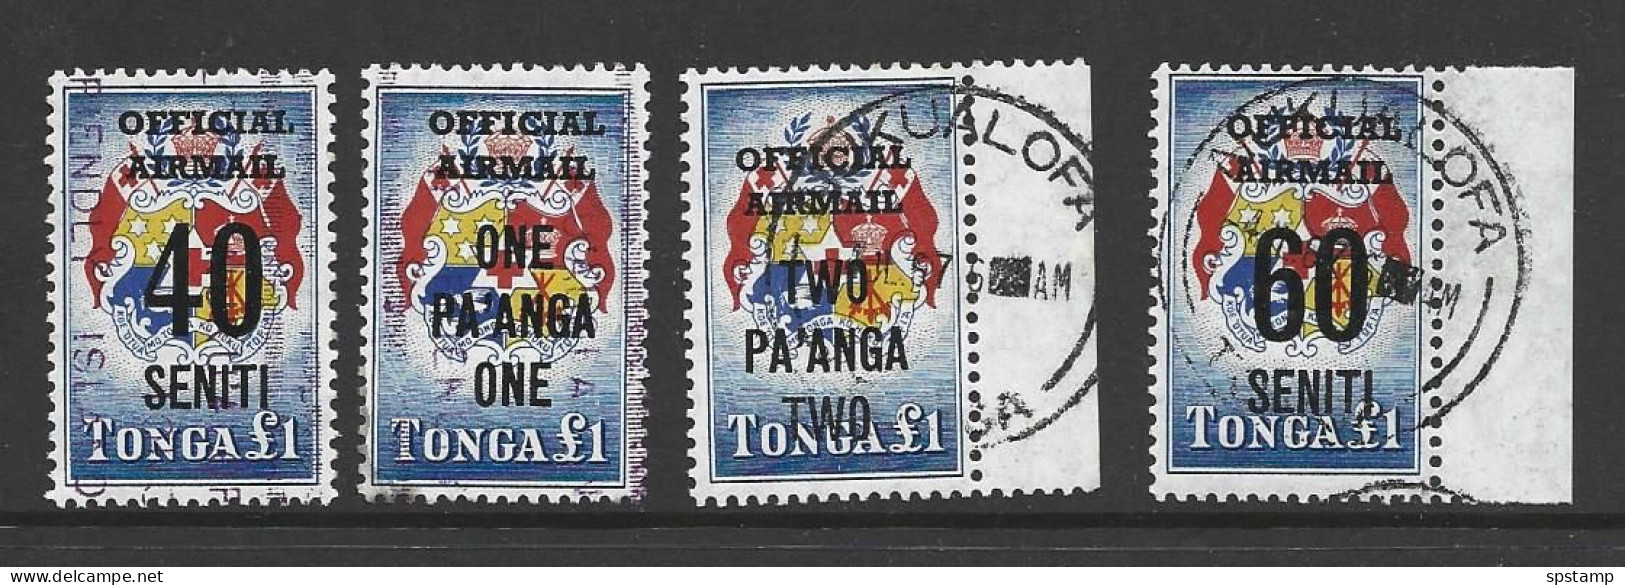 Tonga 1968 1 Pound Coat Of Arms Overprinted Official Airmail Set Of 4 FU - Tonga (...-1970)